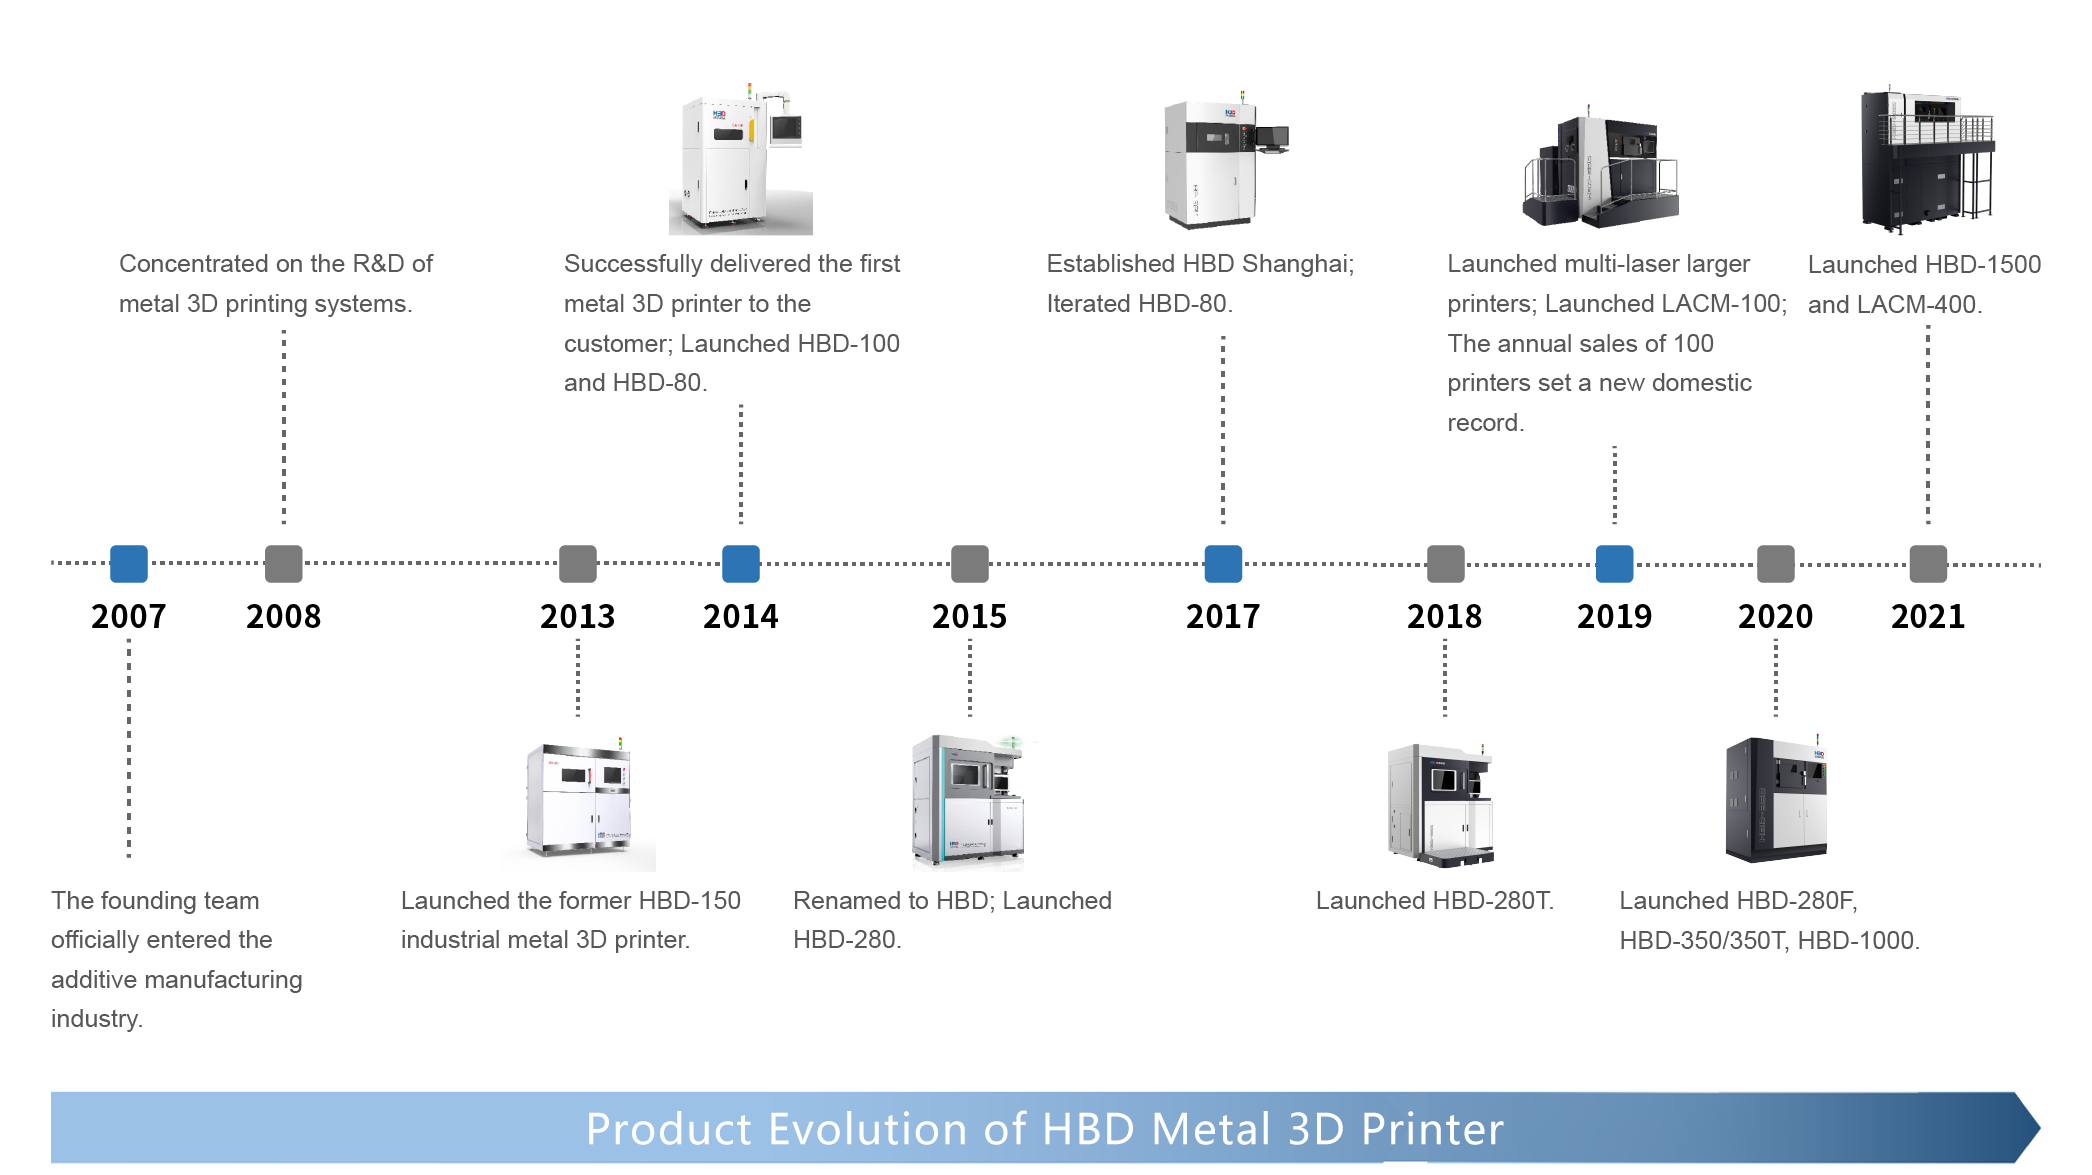 (Ewolucja produktu metalowej drukarki 3D HBD)